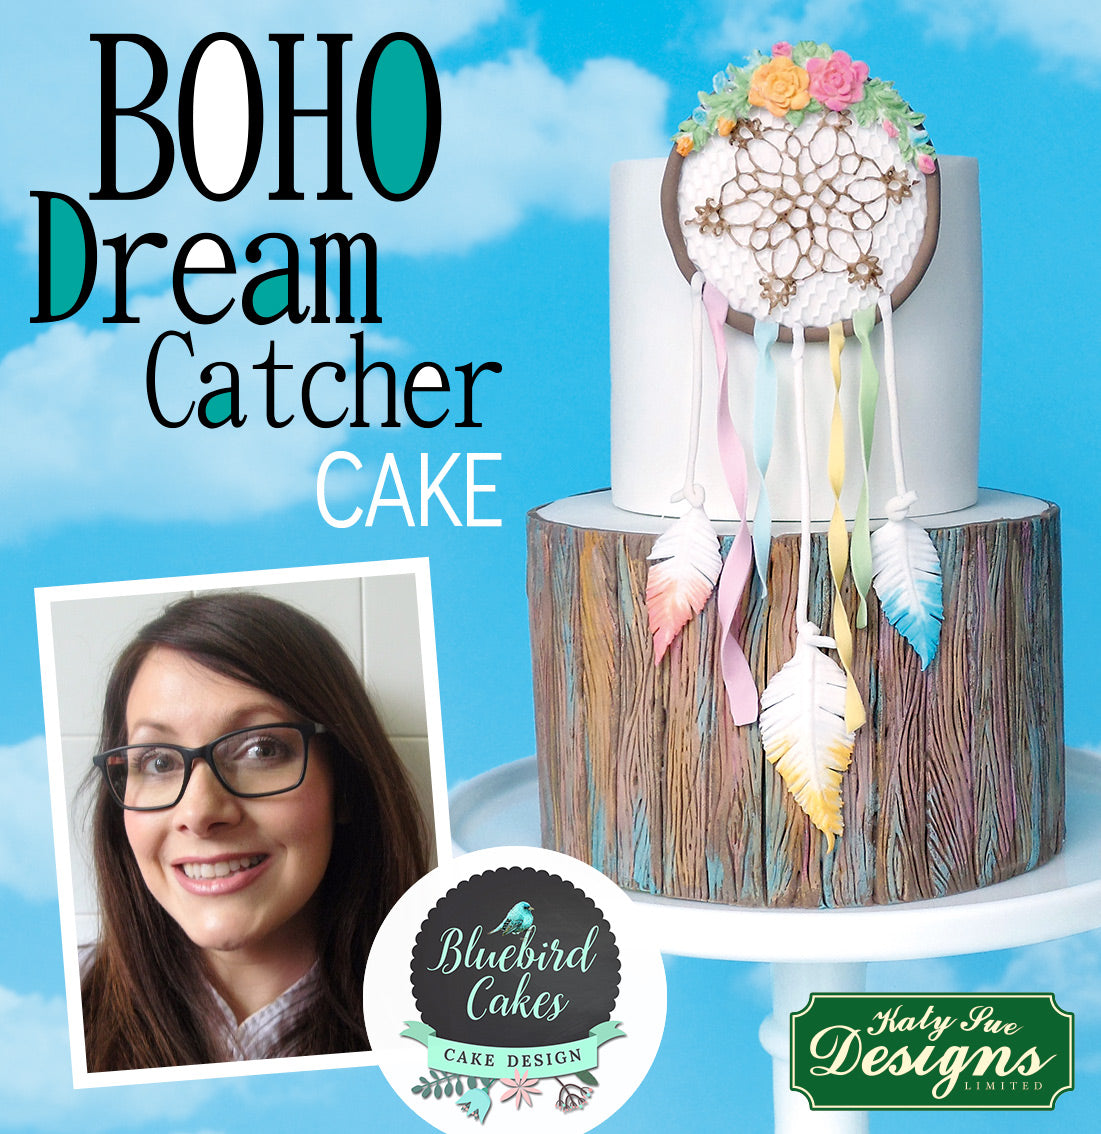 Boho Dream Catcher Cake by Zoe Smith from Bluebird Cakes